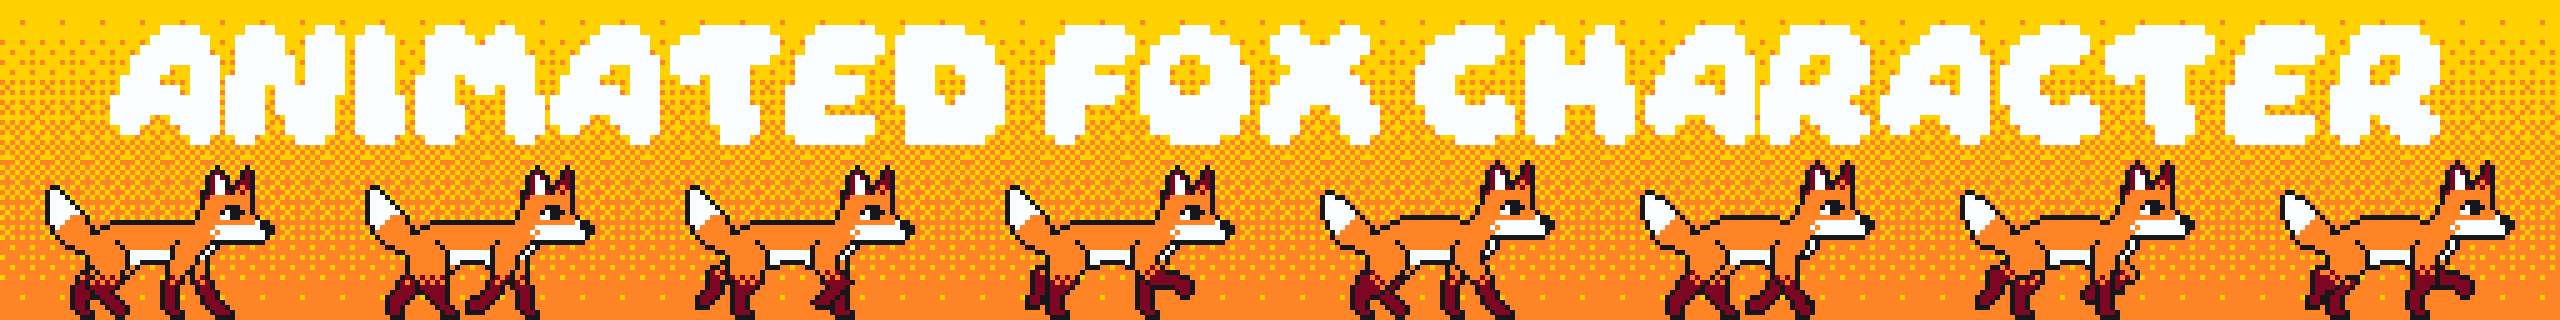 Fox - 2D Animated Pixel Art Character